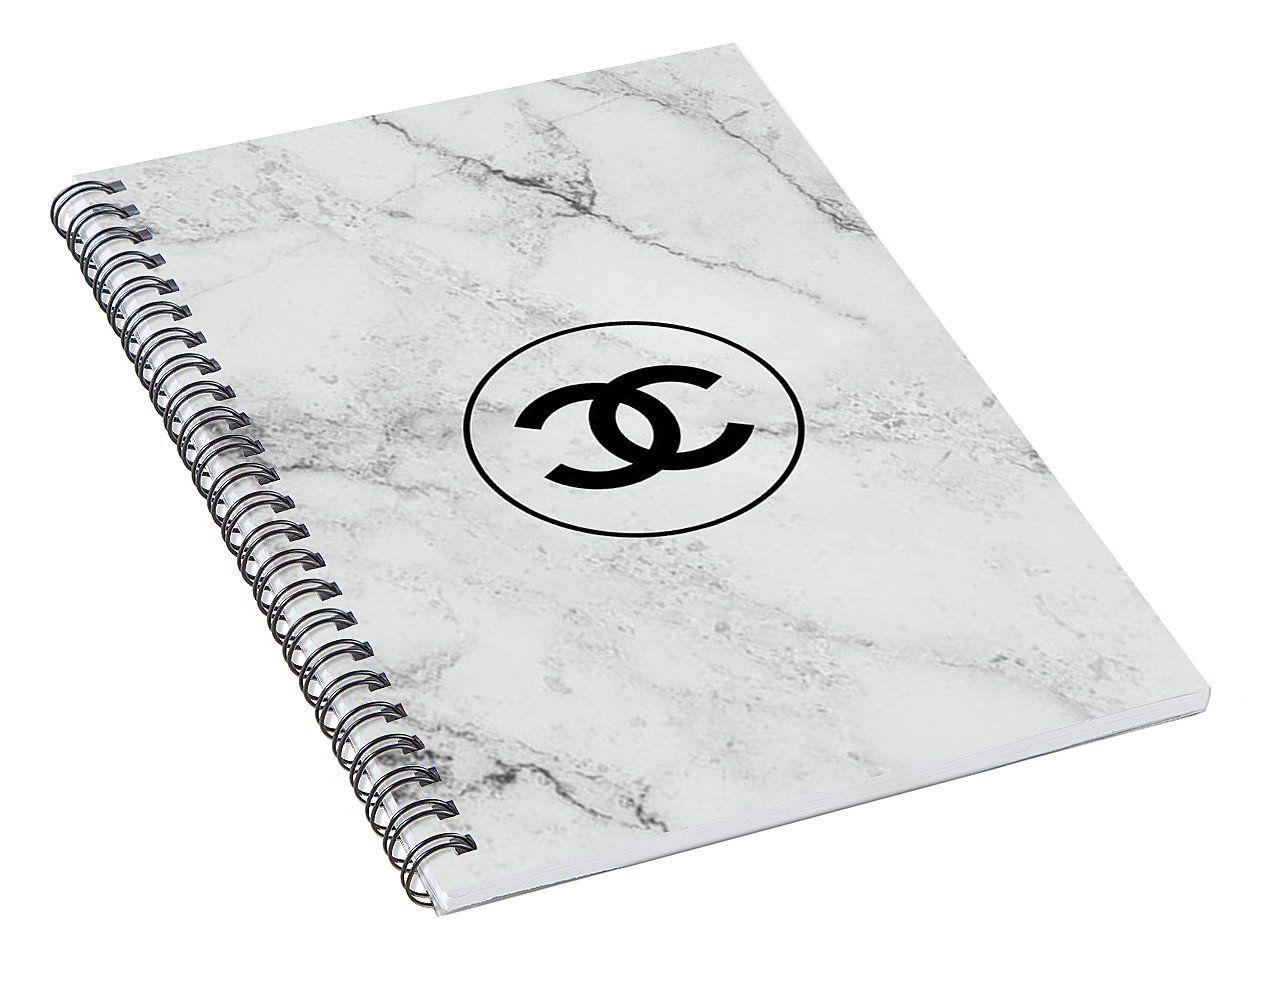 Black Spiral Logo - Chanel Marble Logo, Black Spiral Notebook